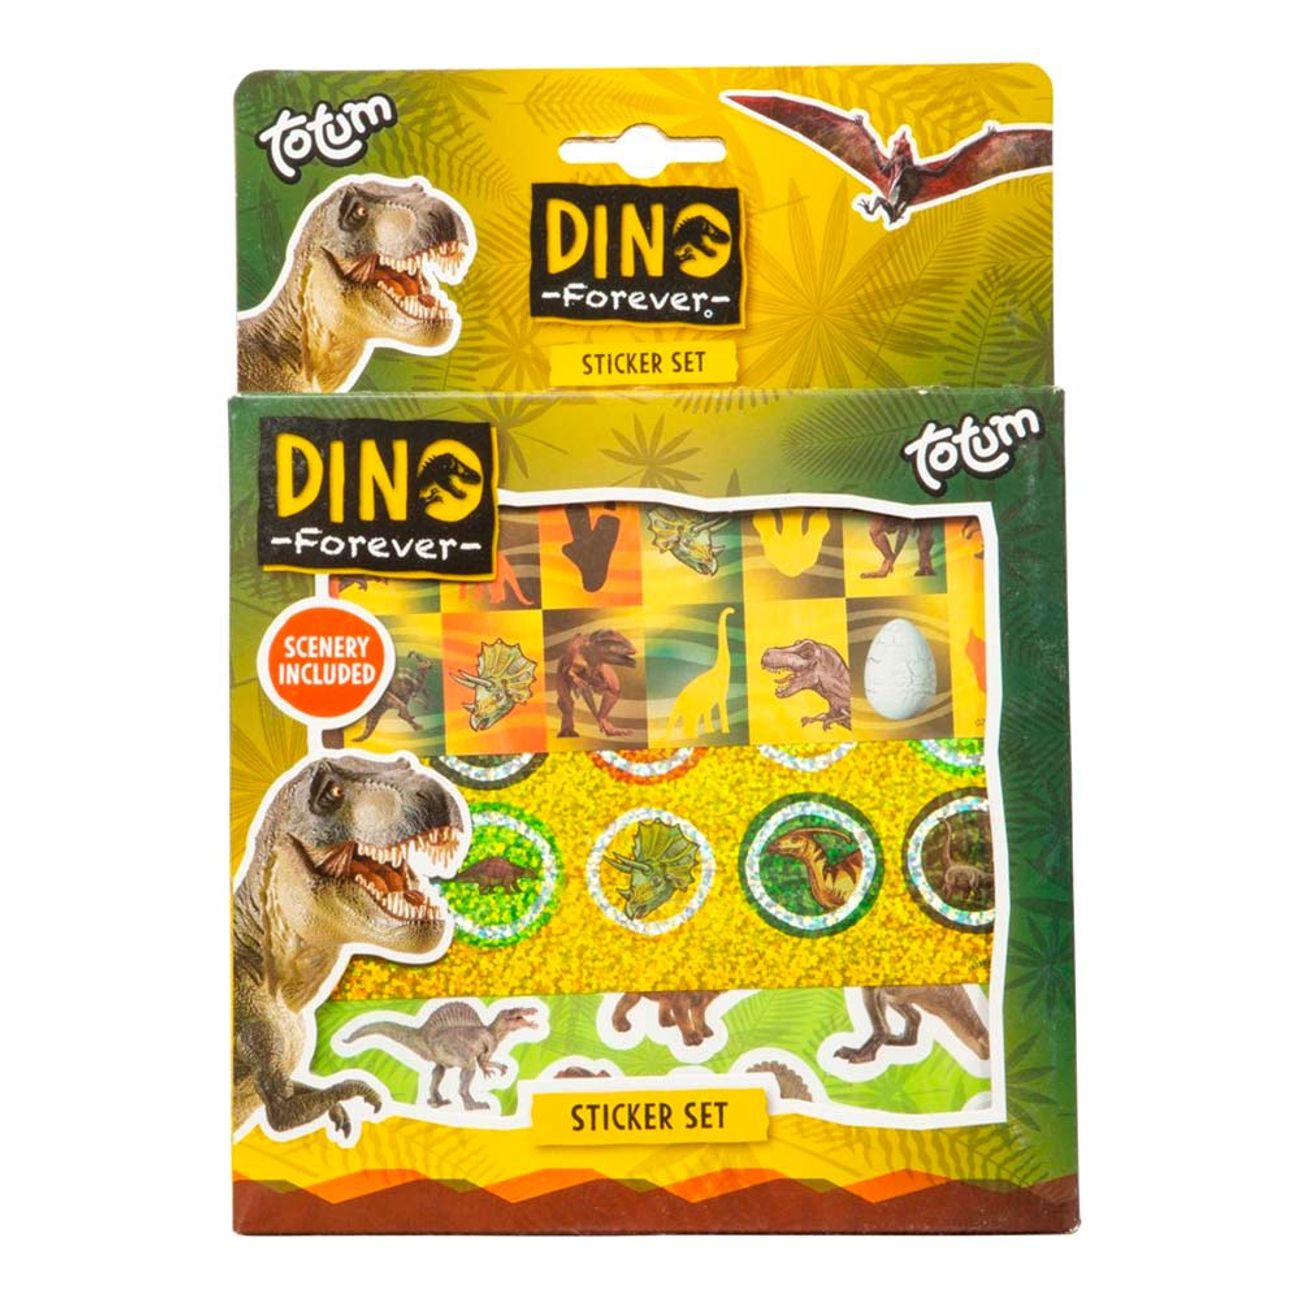 stickers-dinosaurier-100154-2